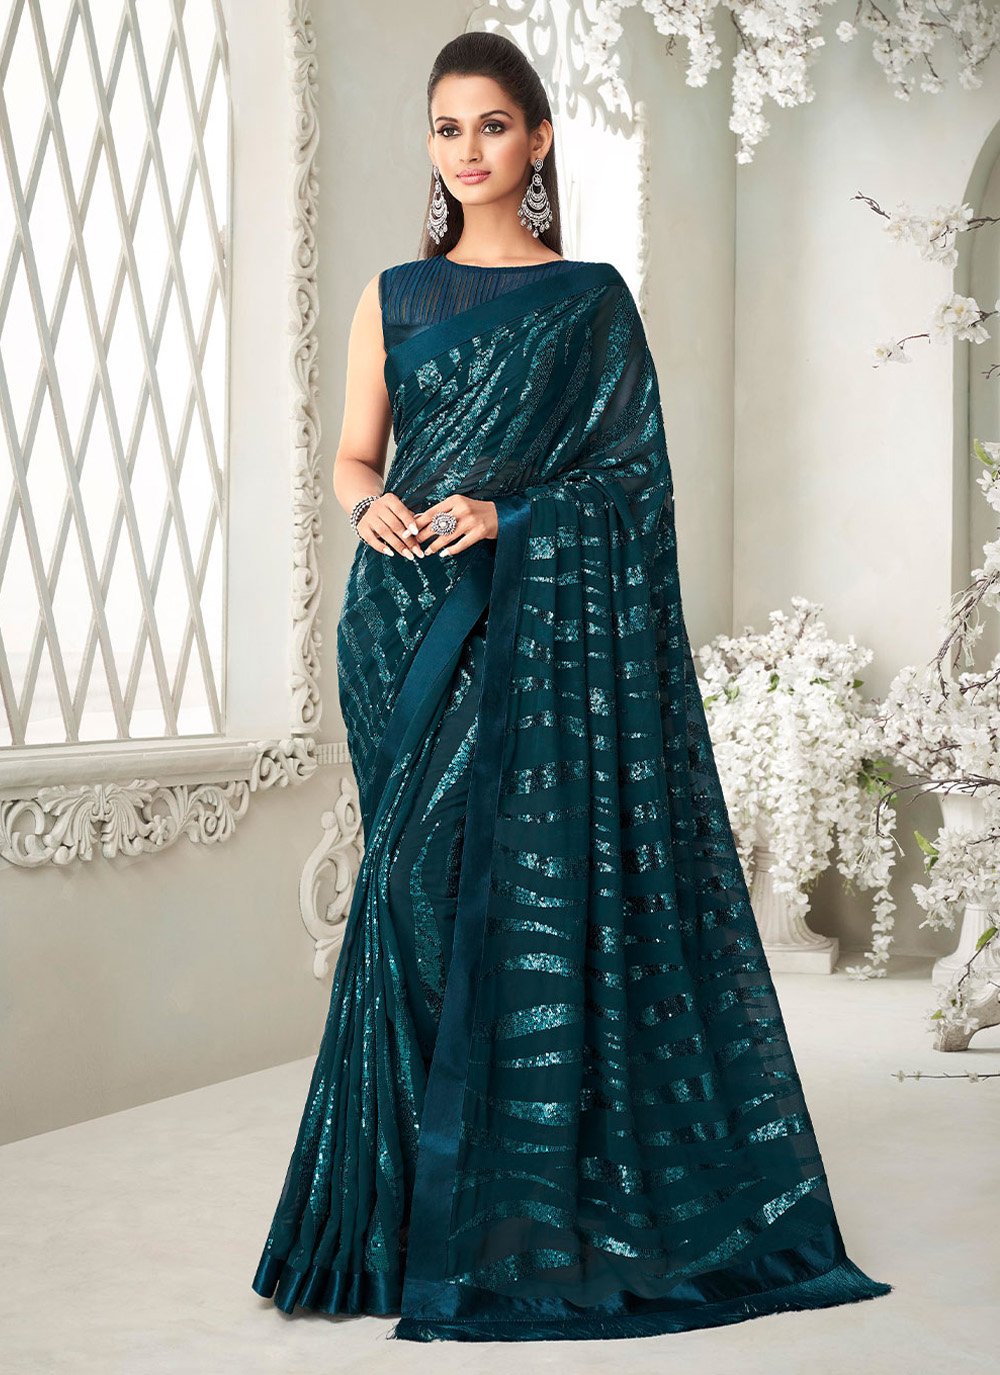 Net Sari, Saree Girls for sale | eBay